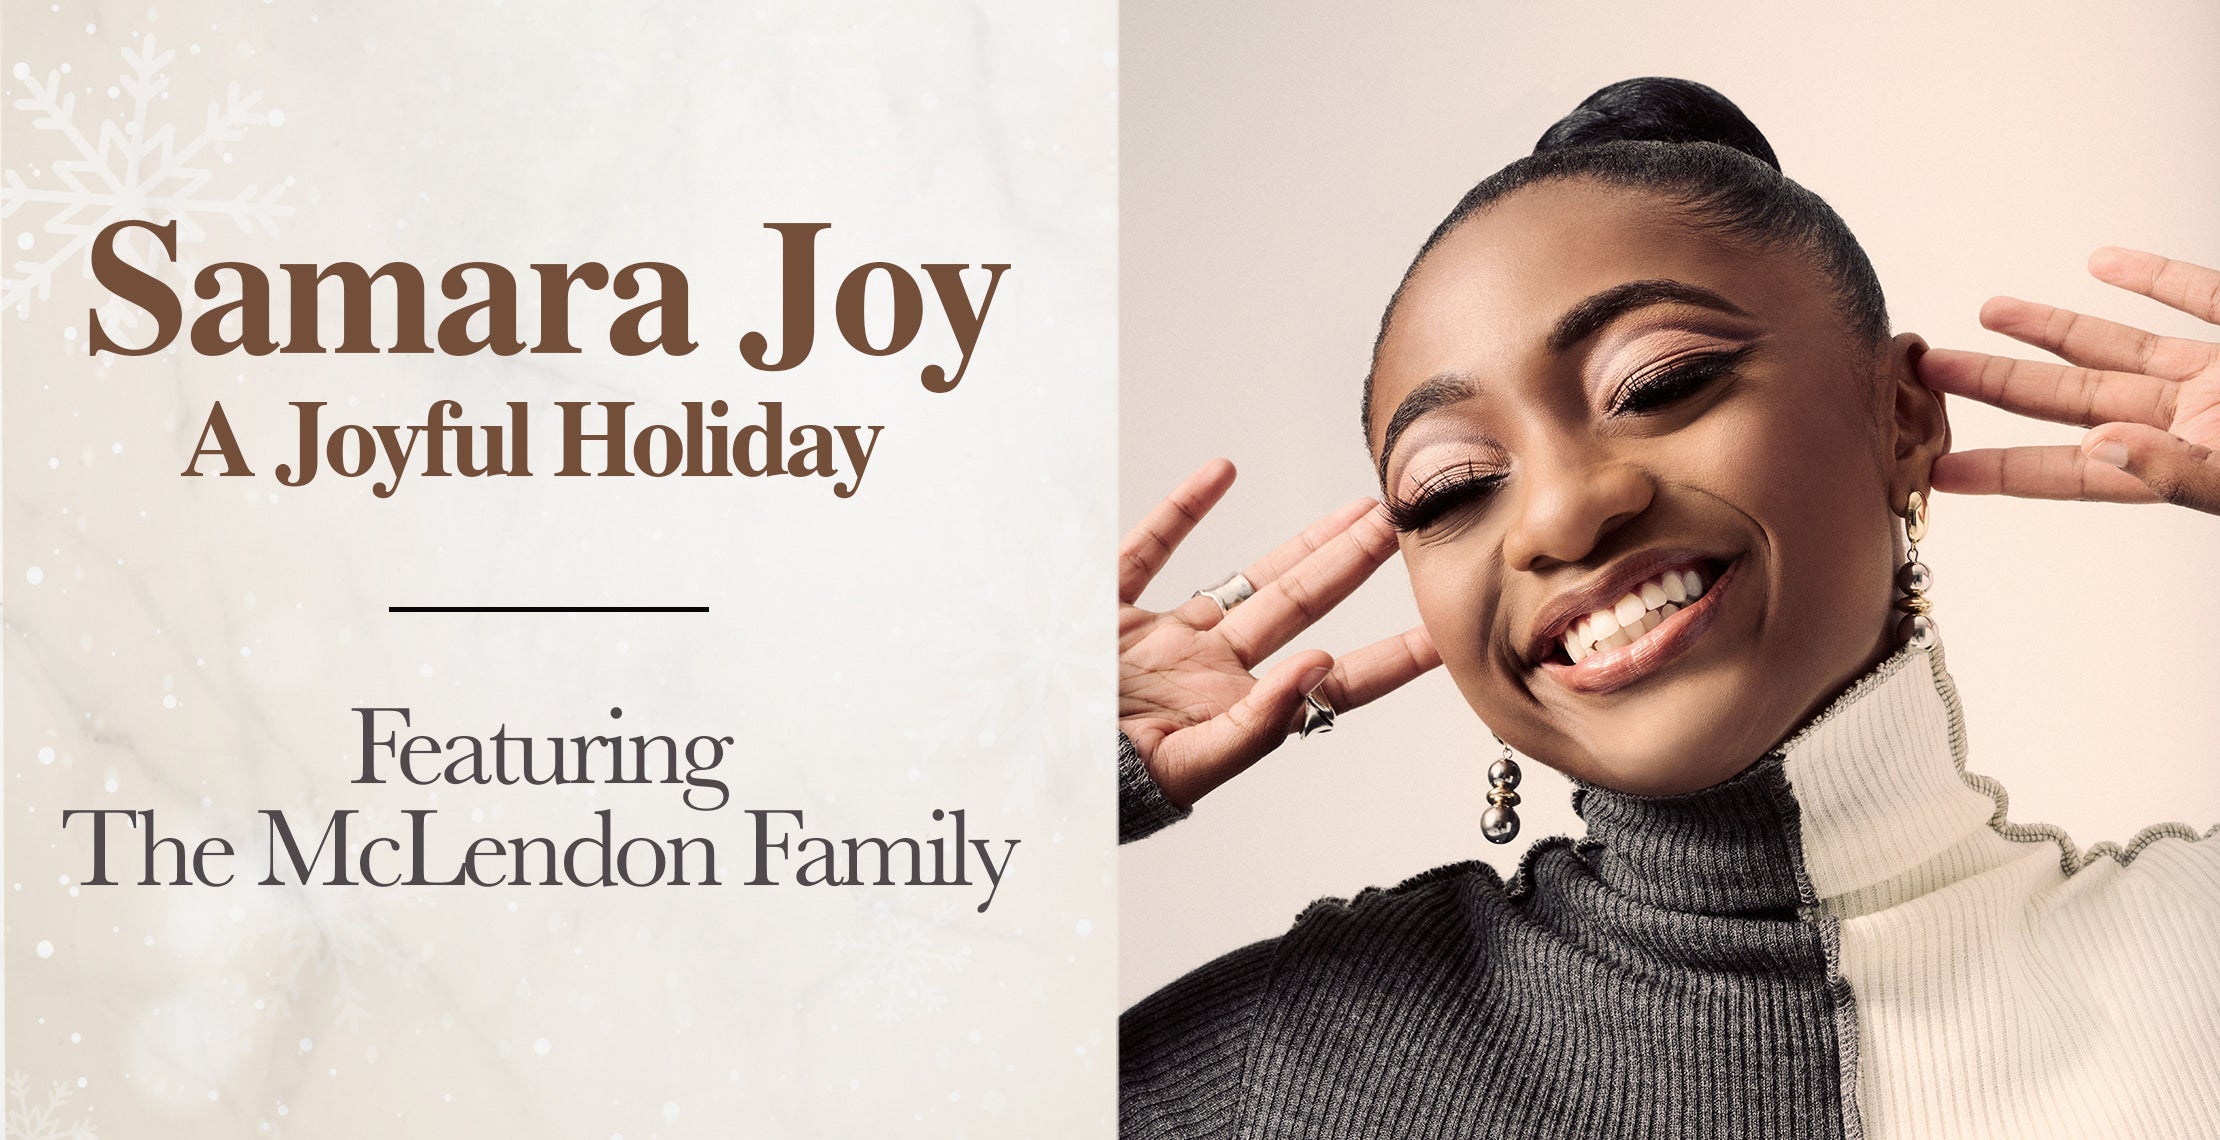 Samara Joy: “A Joyful Holiday” Featuring the McLendon Family